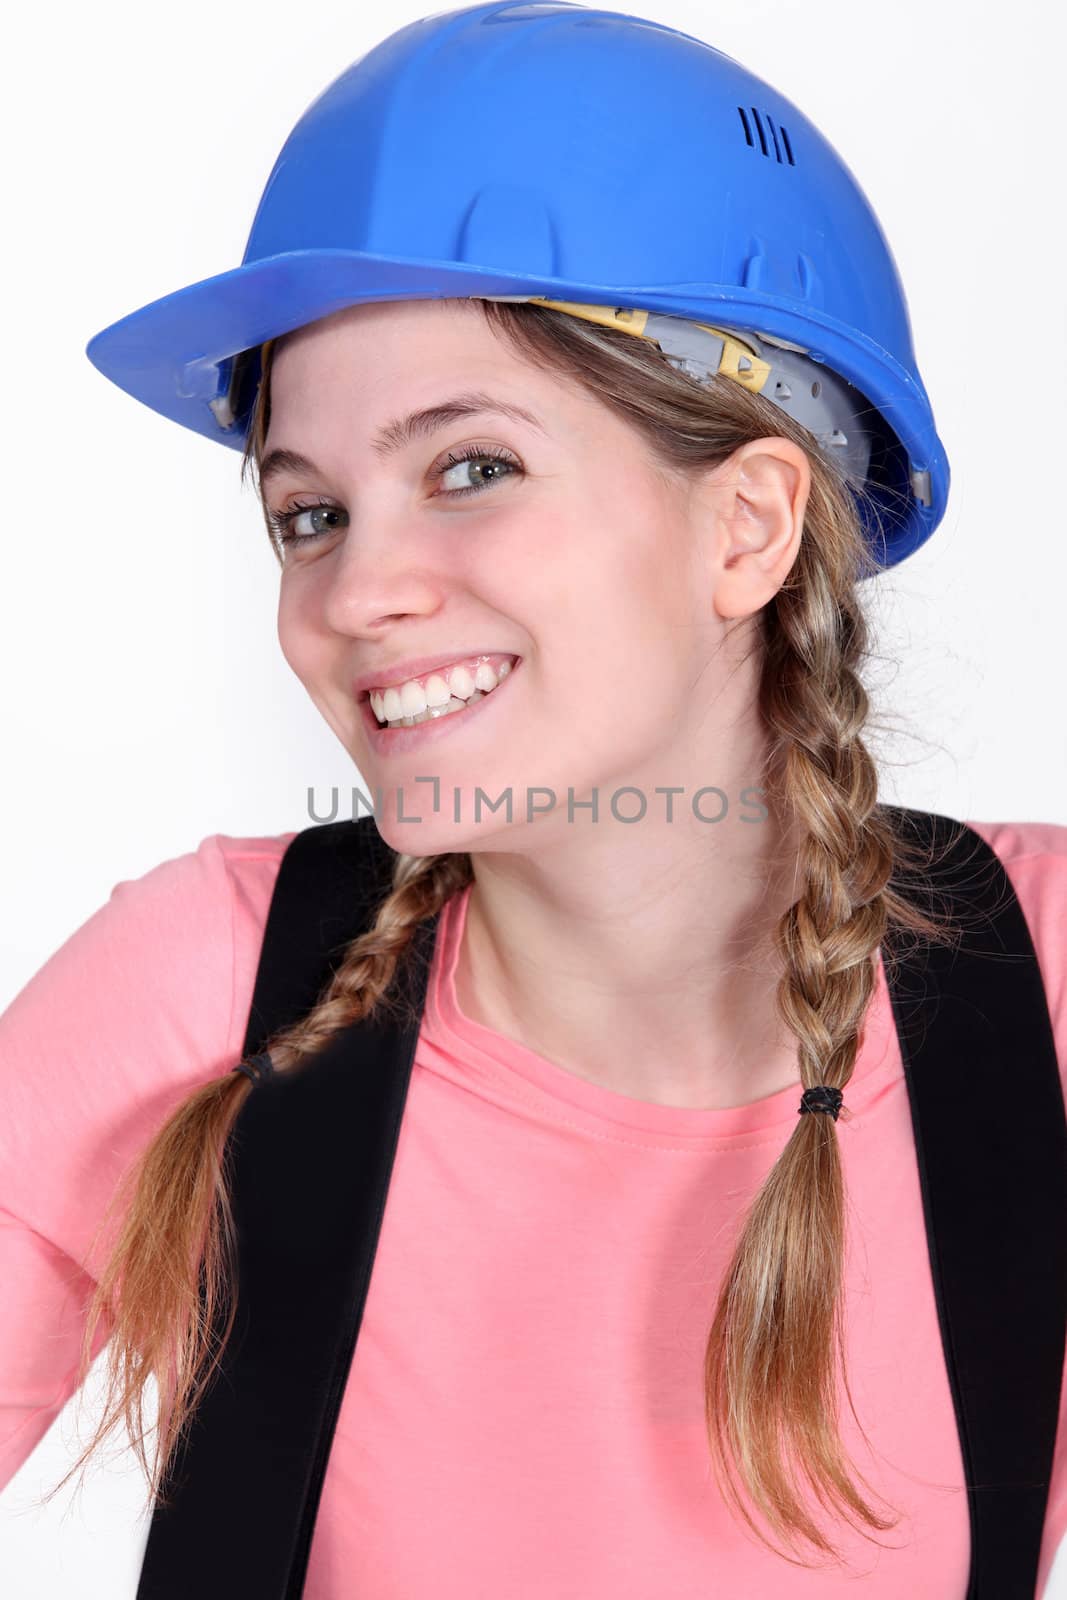 Happy female builder